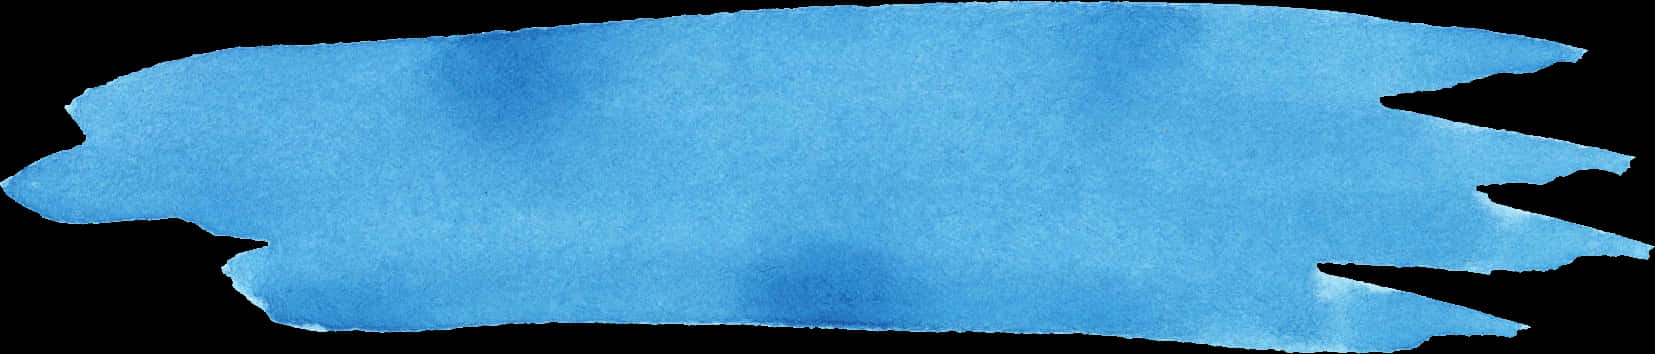 Blue Watercolor Brush Stroke PNG image